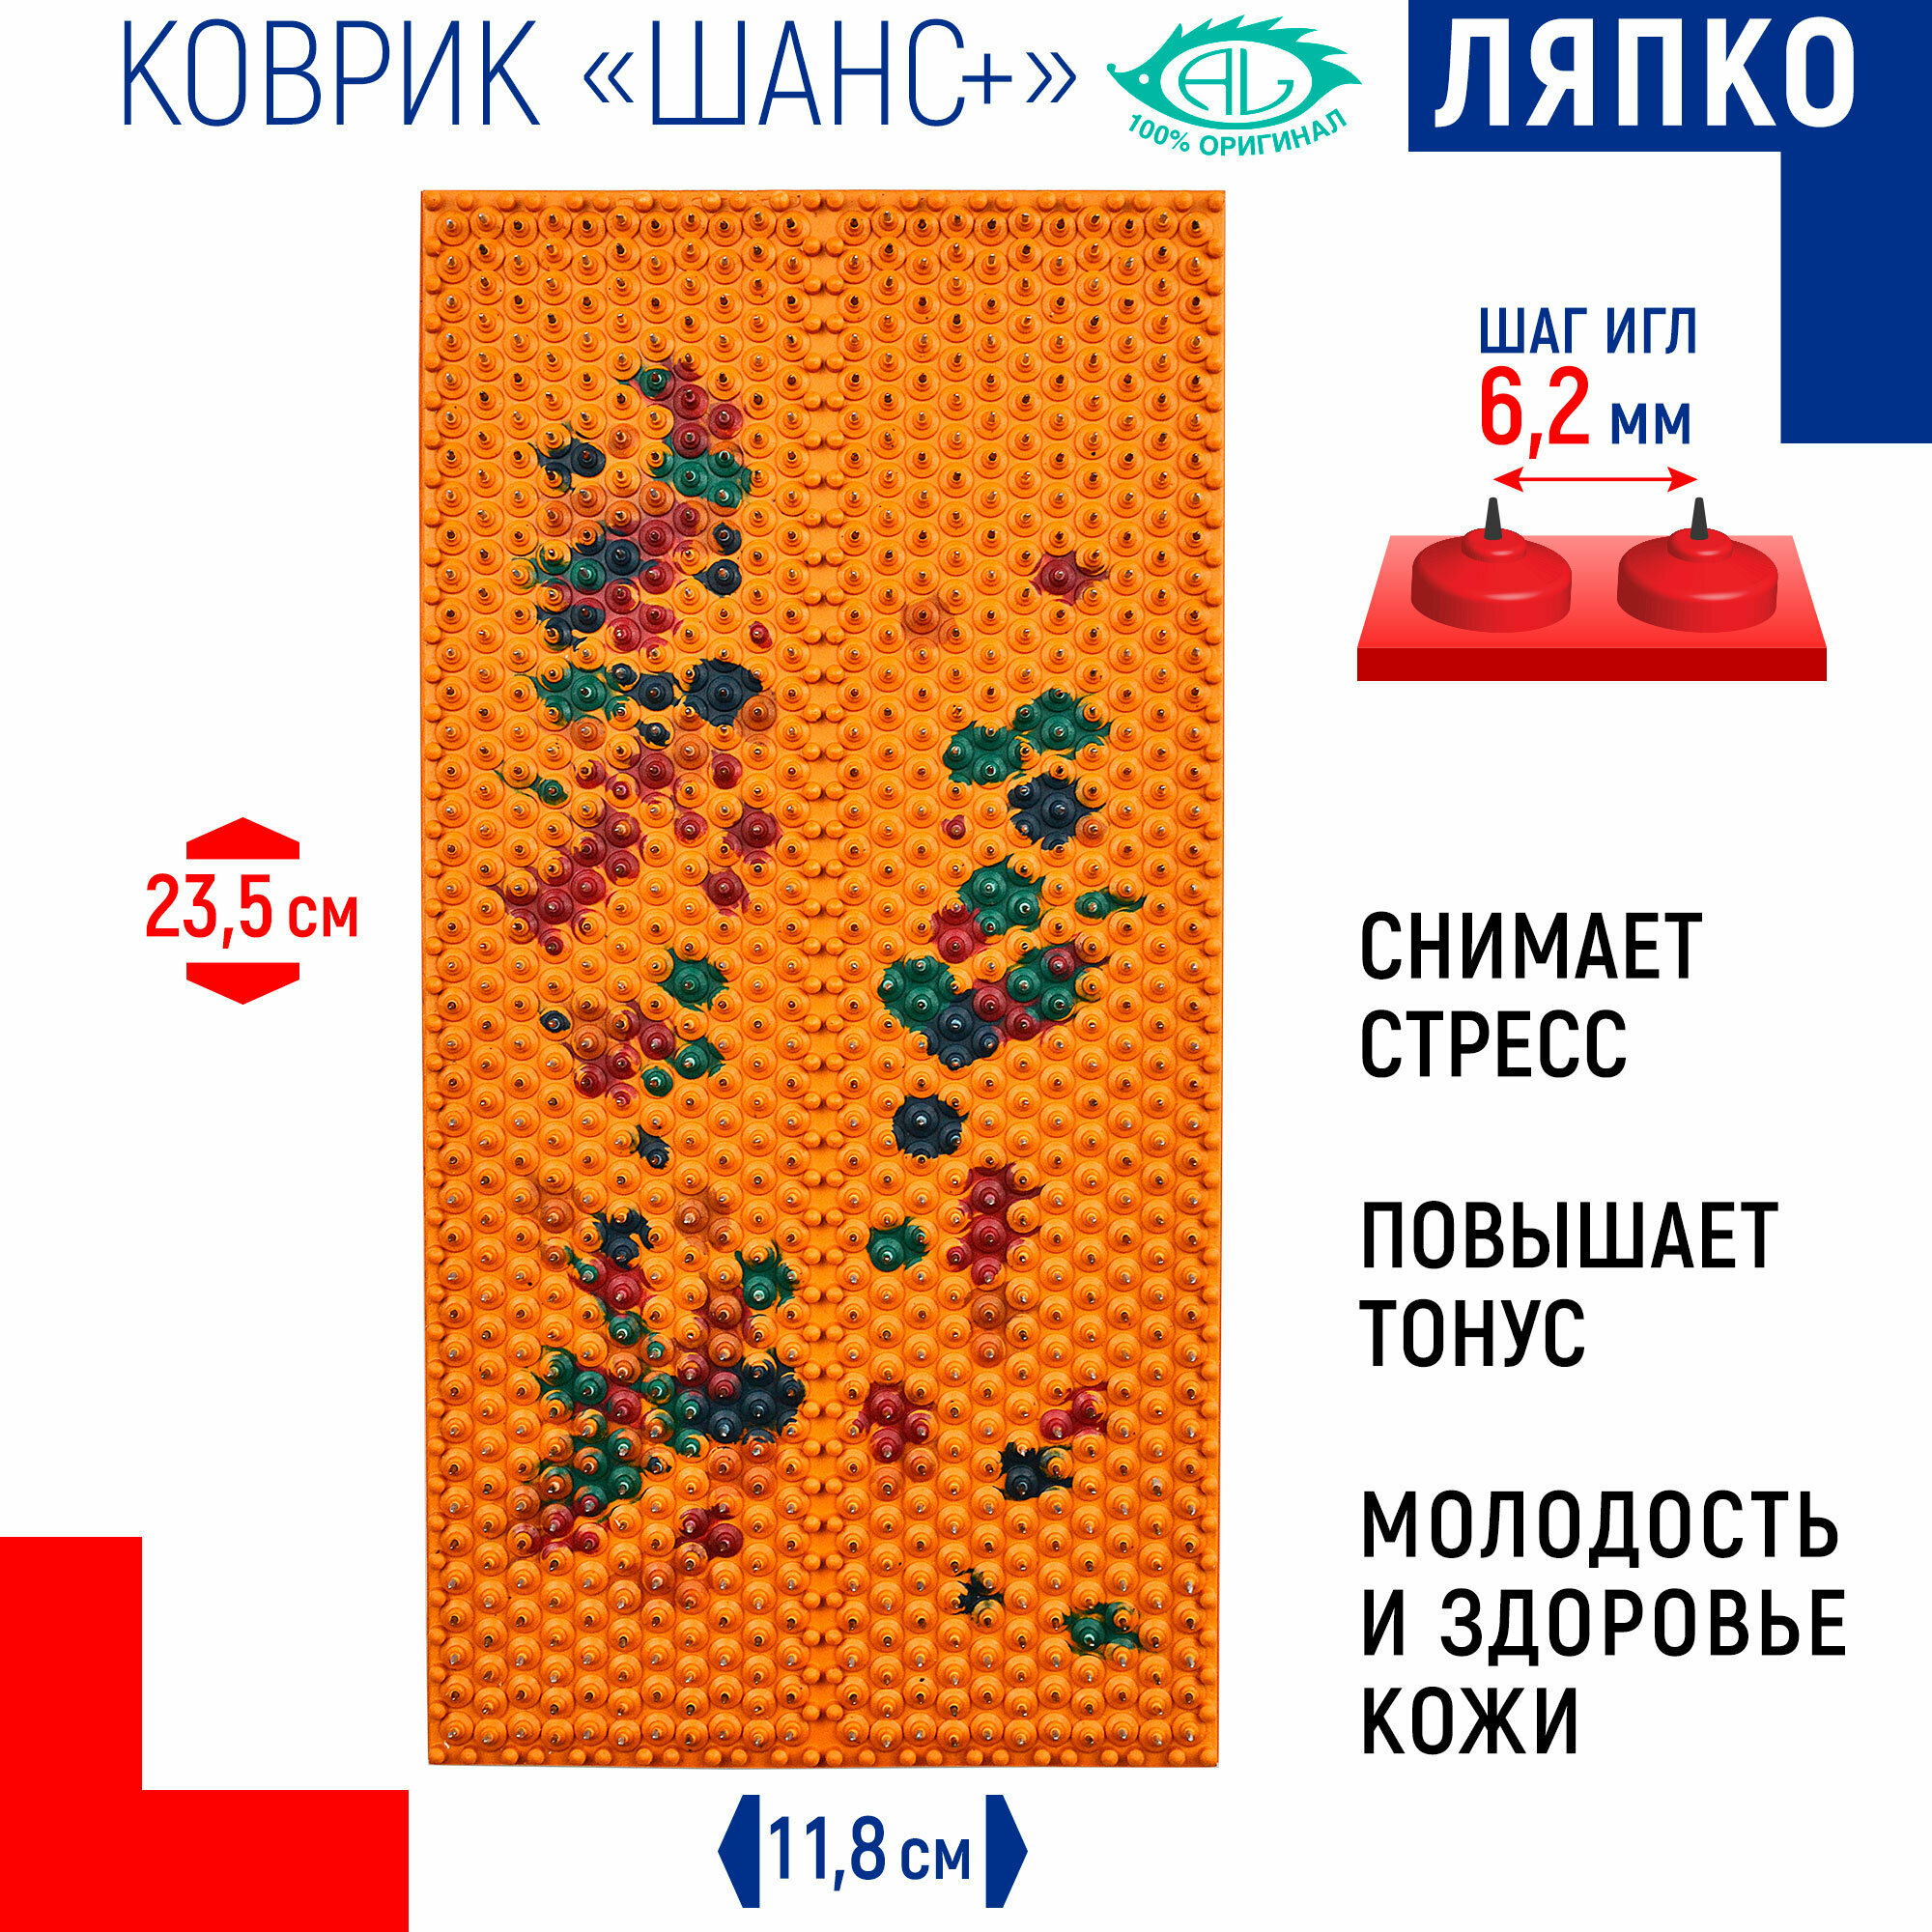 Массажер коврик аппликатор Ляпко Шанс, шаг игл 6.2 мм (23.5х11.8 см)